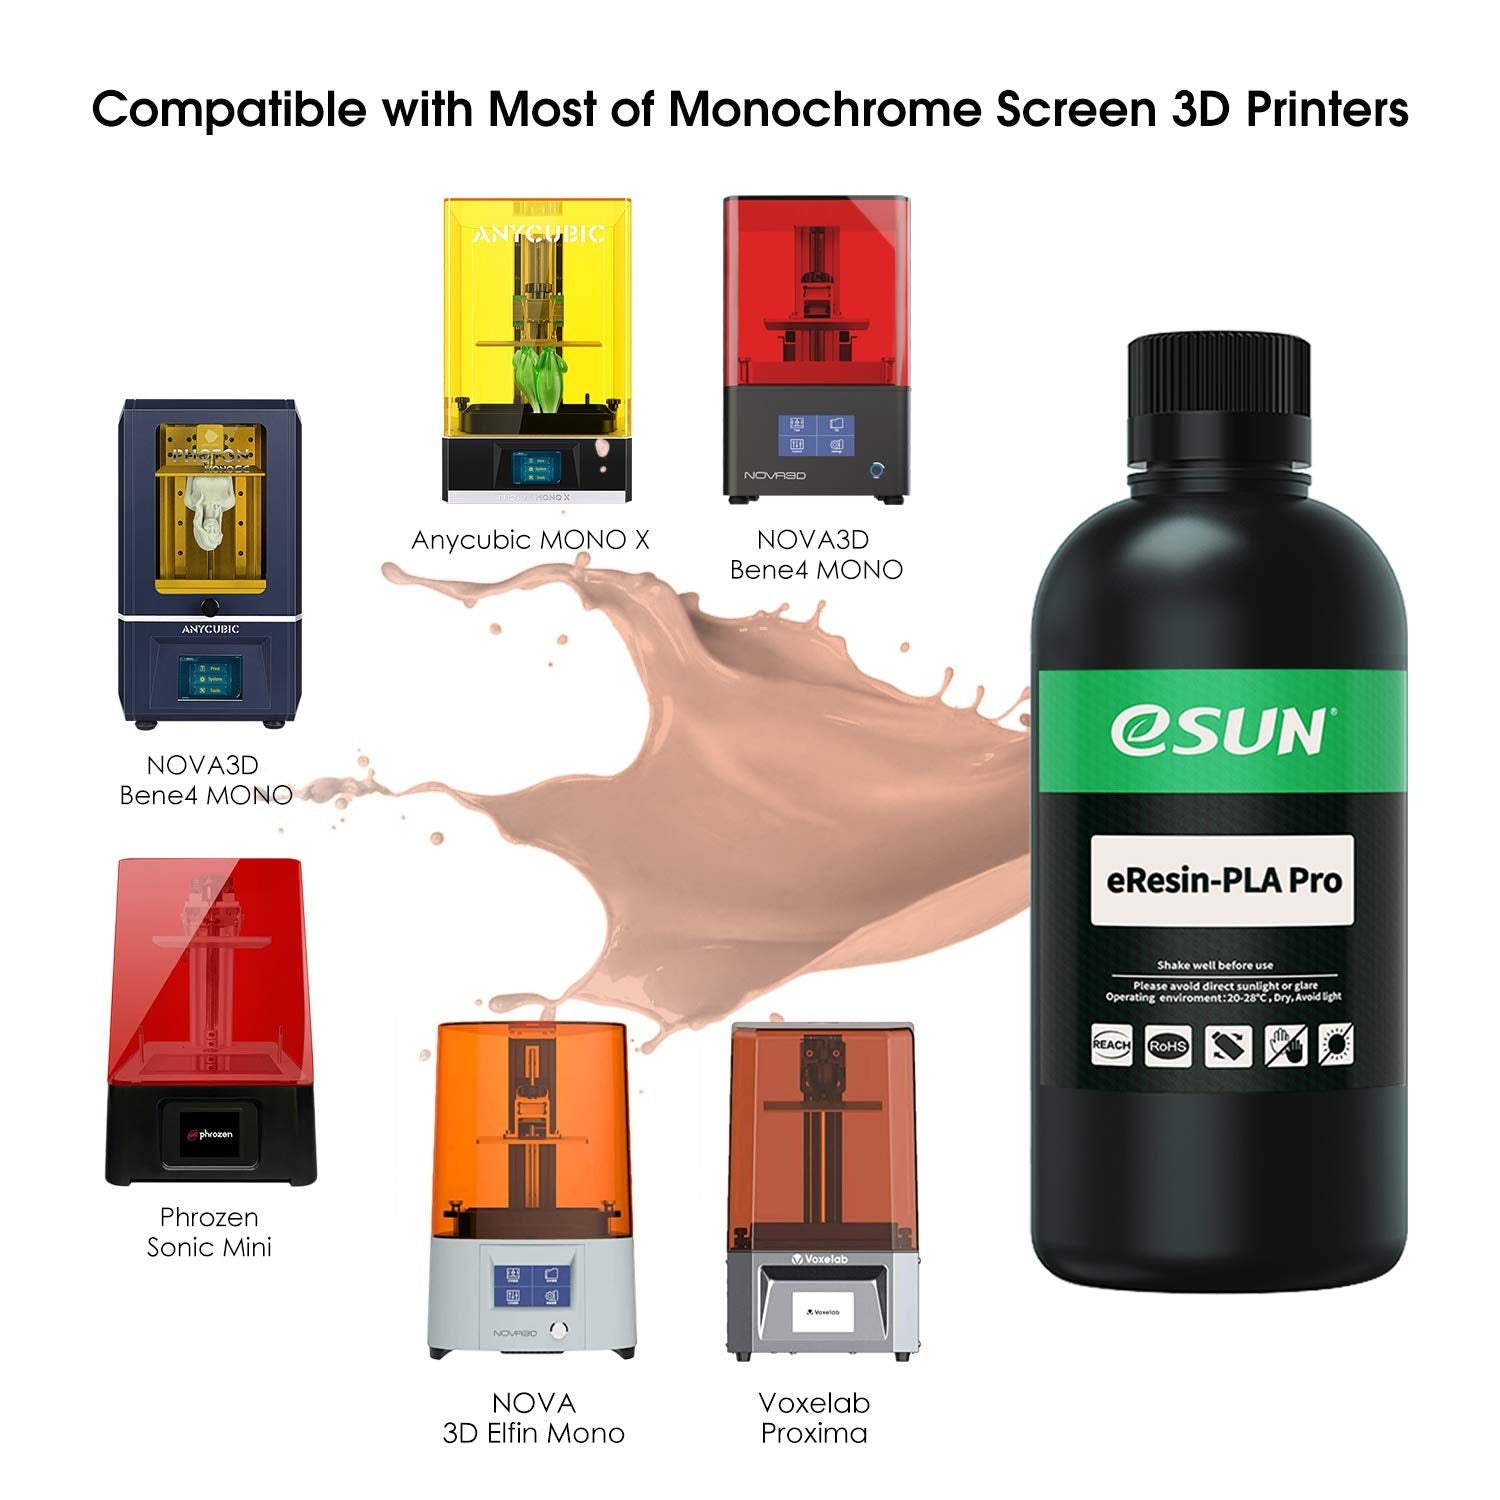 eSUN Plant Based Pro UV Resin, 405nm LCD UV Curing Photopolymer High Precision Low Odour Liquid Resin